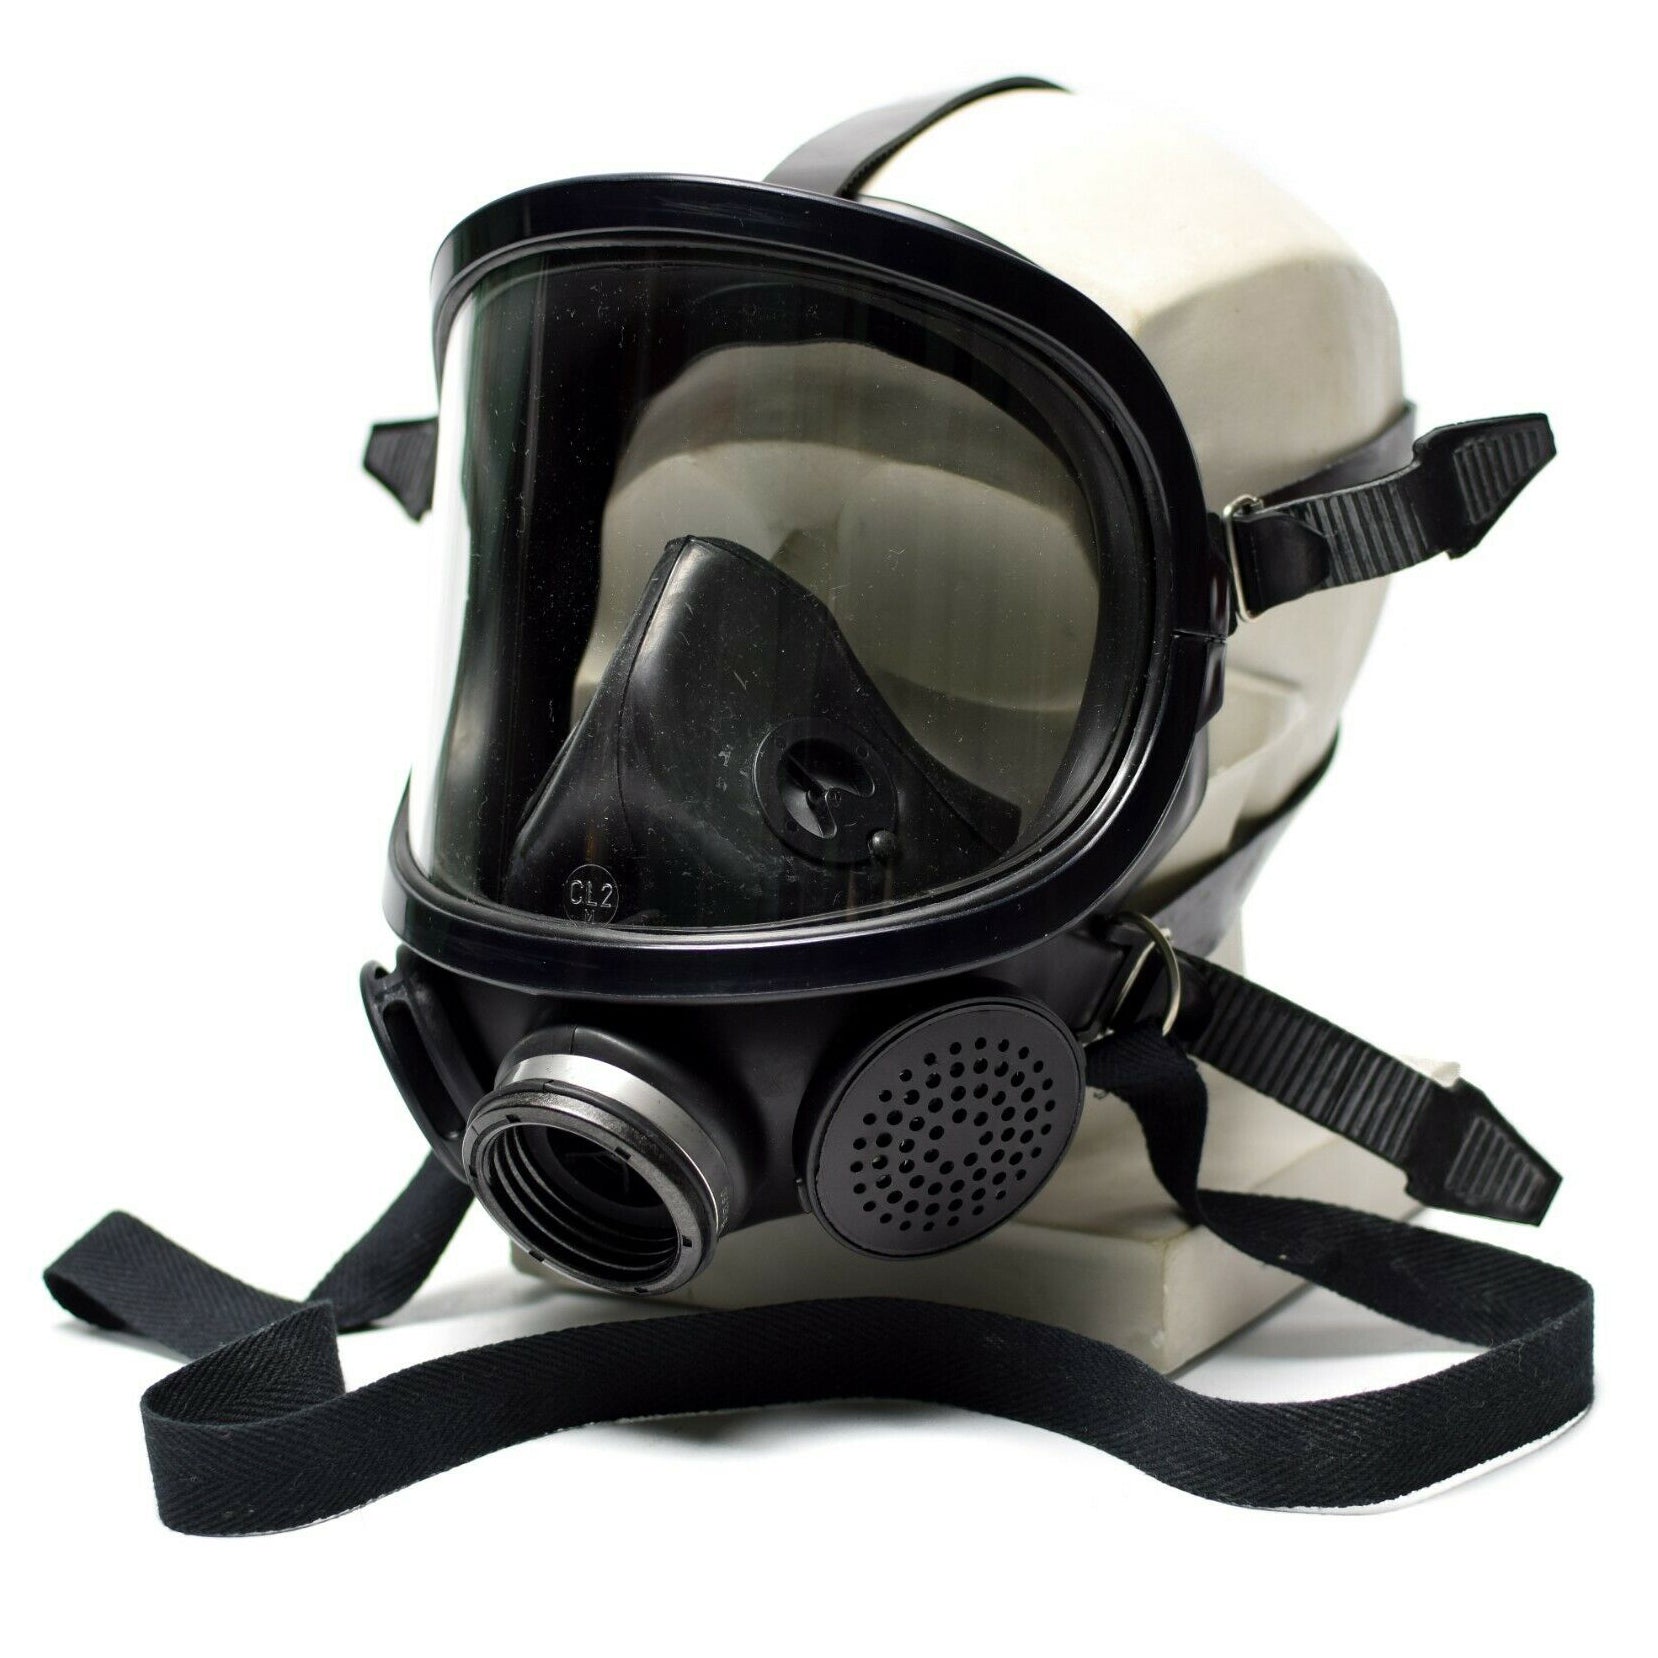 Honeywell 1710395 Panoramasque Full Face Respirator Masks